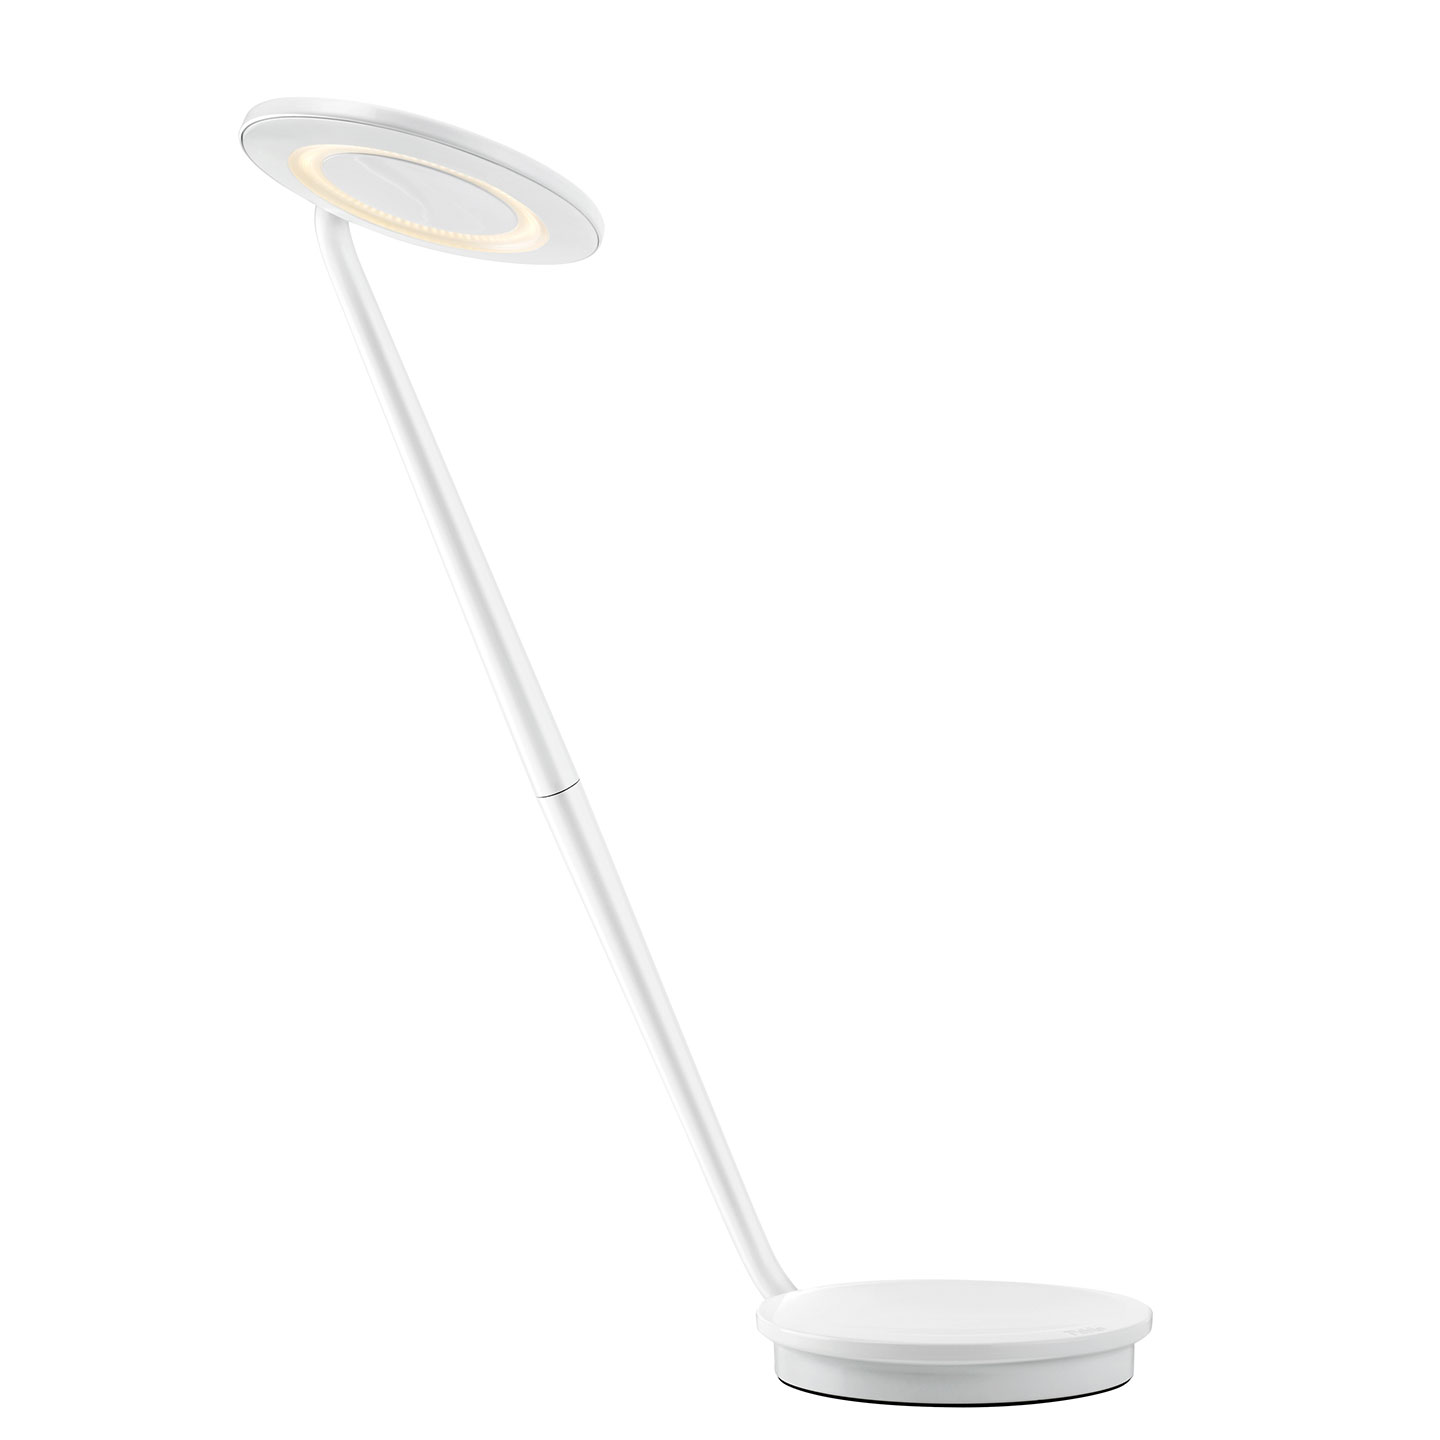 Haworth Pixo Lighting in white color